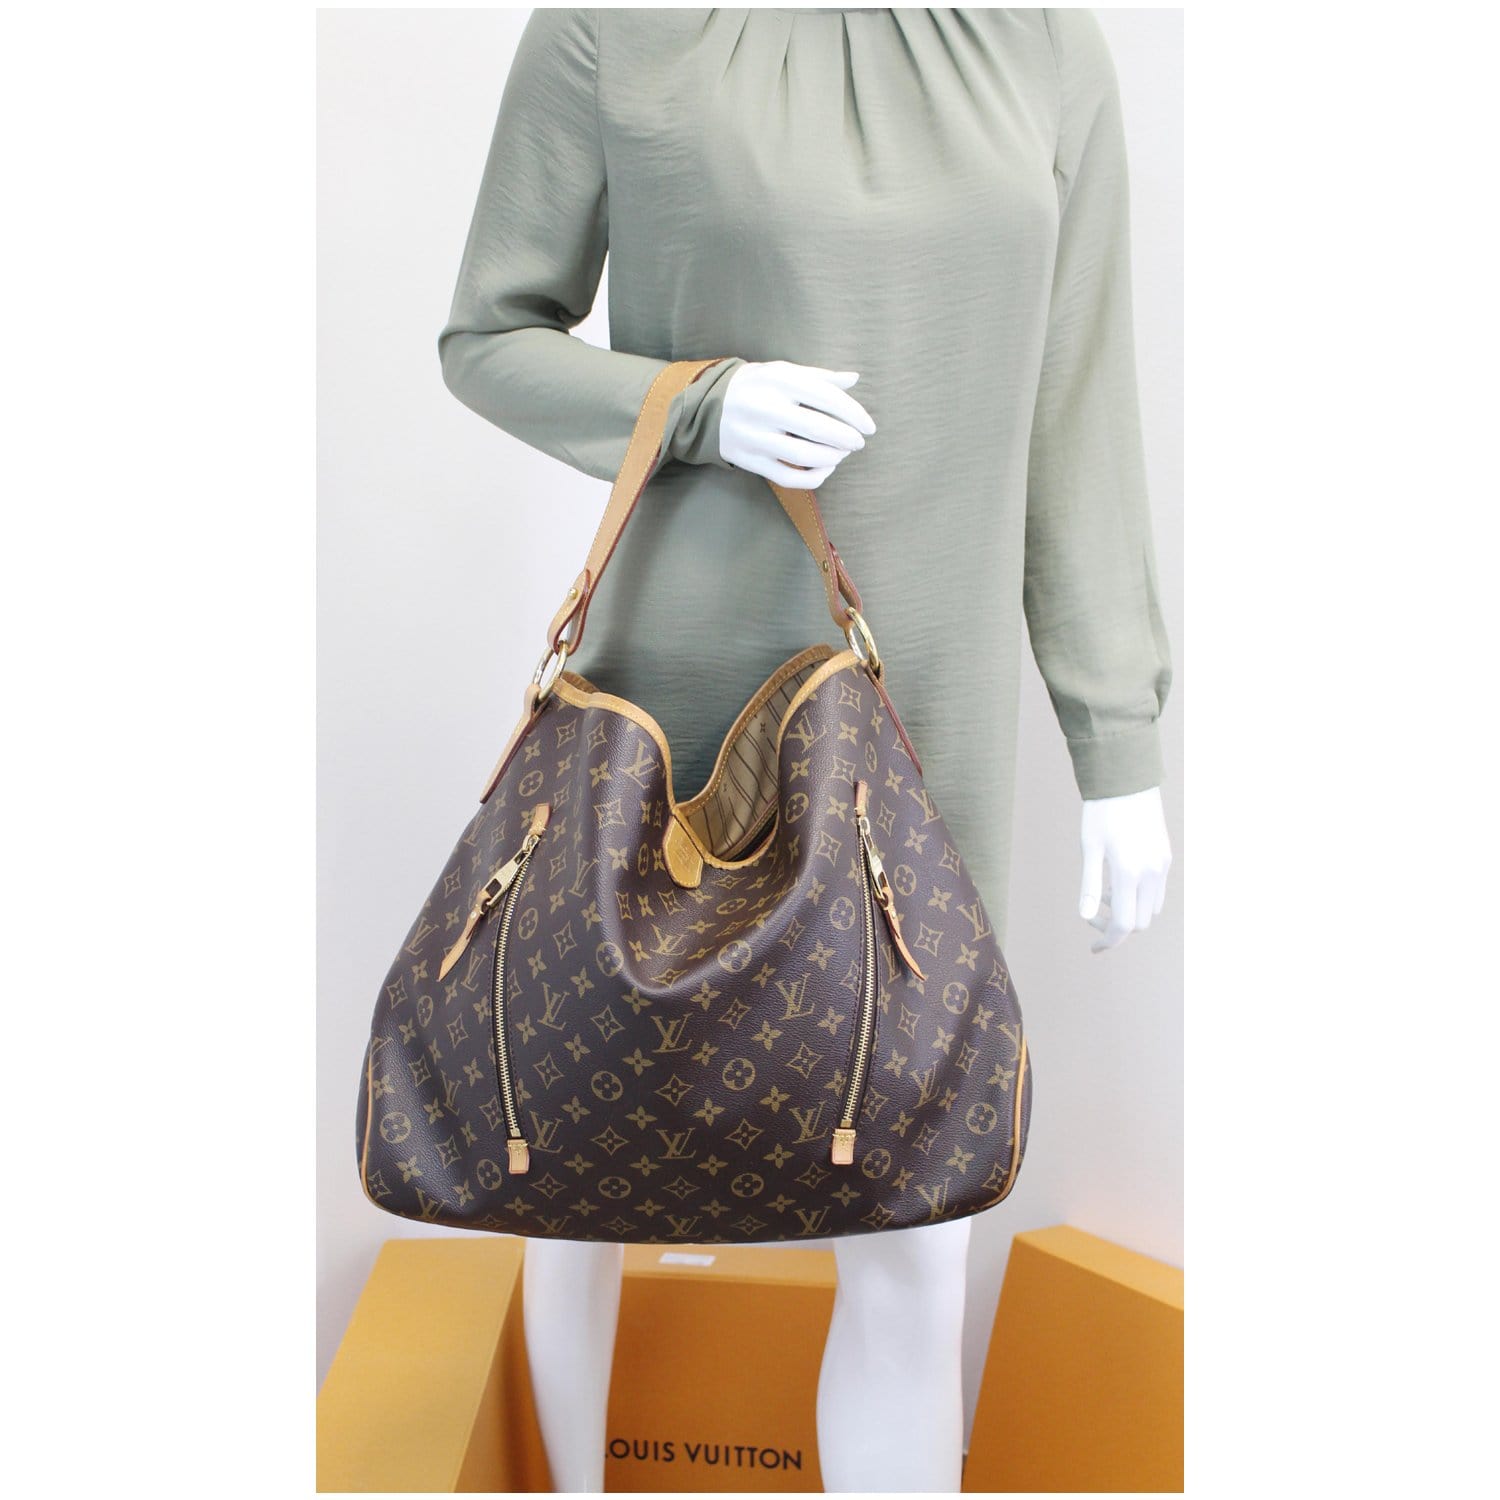 Louis Vuitton, Bags, Louis Vuitton Delightful Handbag Gm